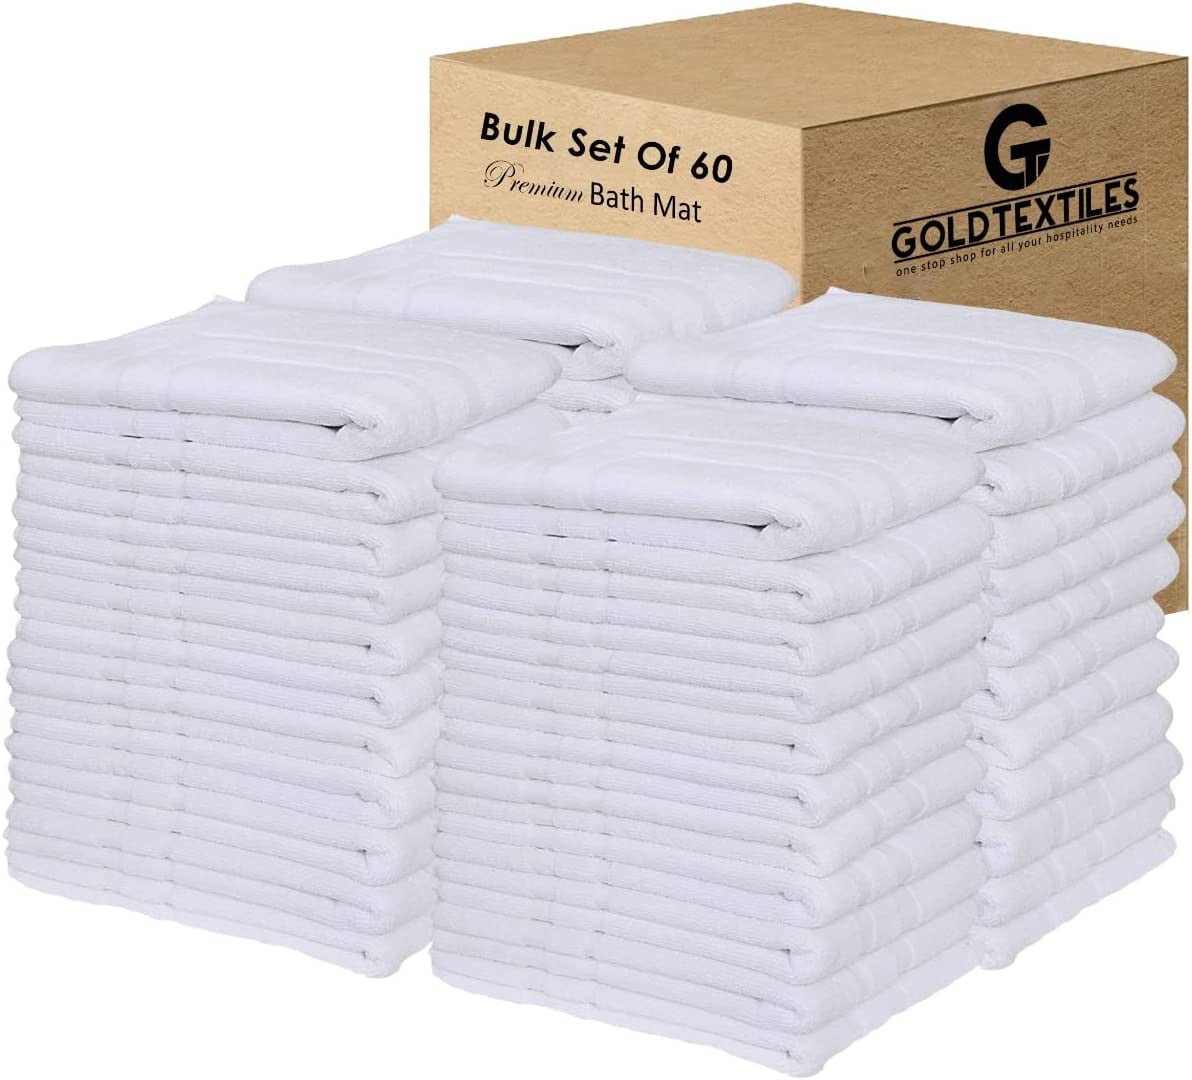 GOLD TEXTILES 60 Pack White Hotel Bath Towels Bulk 20x40 Inches - Cotton  Blend Economy Cheap Bath Towels for Commercial Uses, Gym, Salon, Spa & Hair  